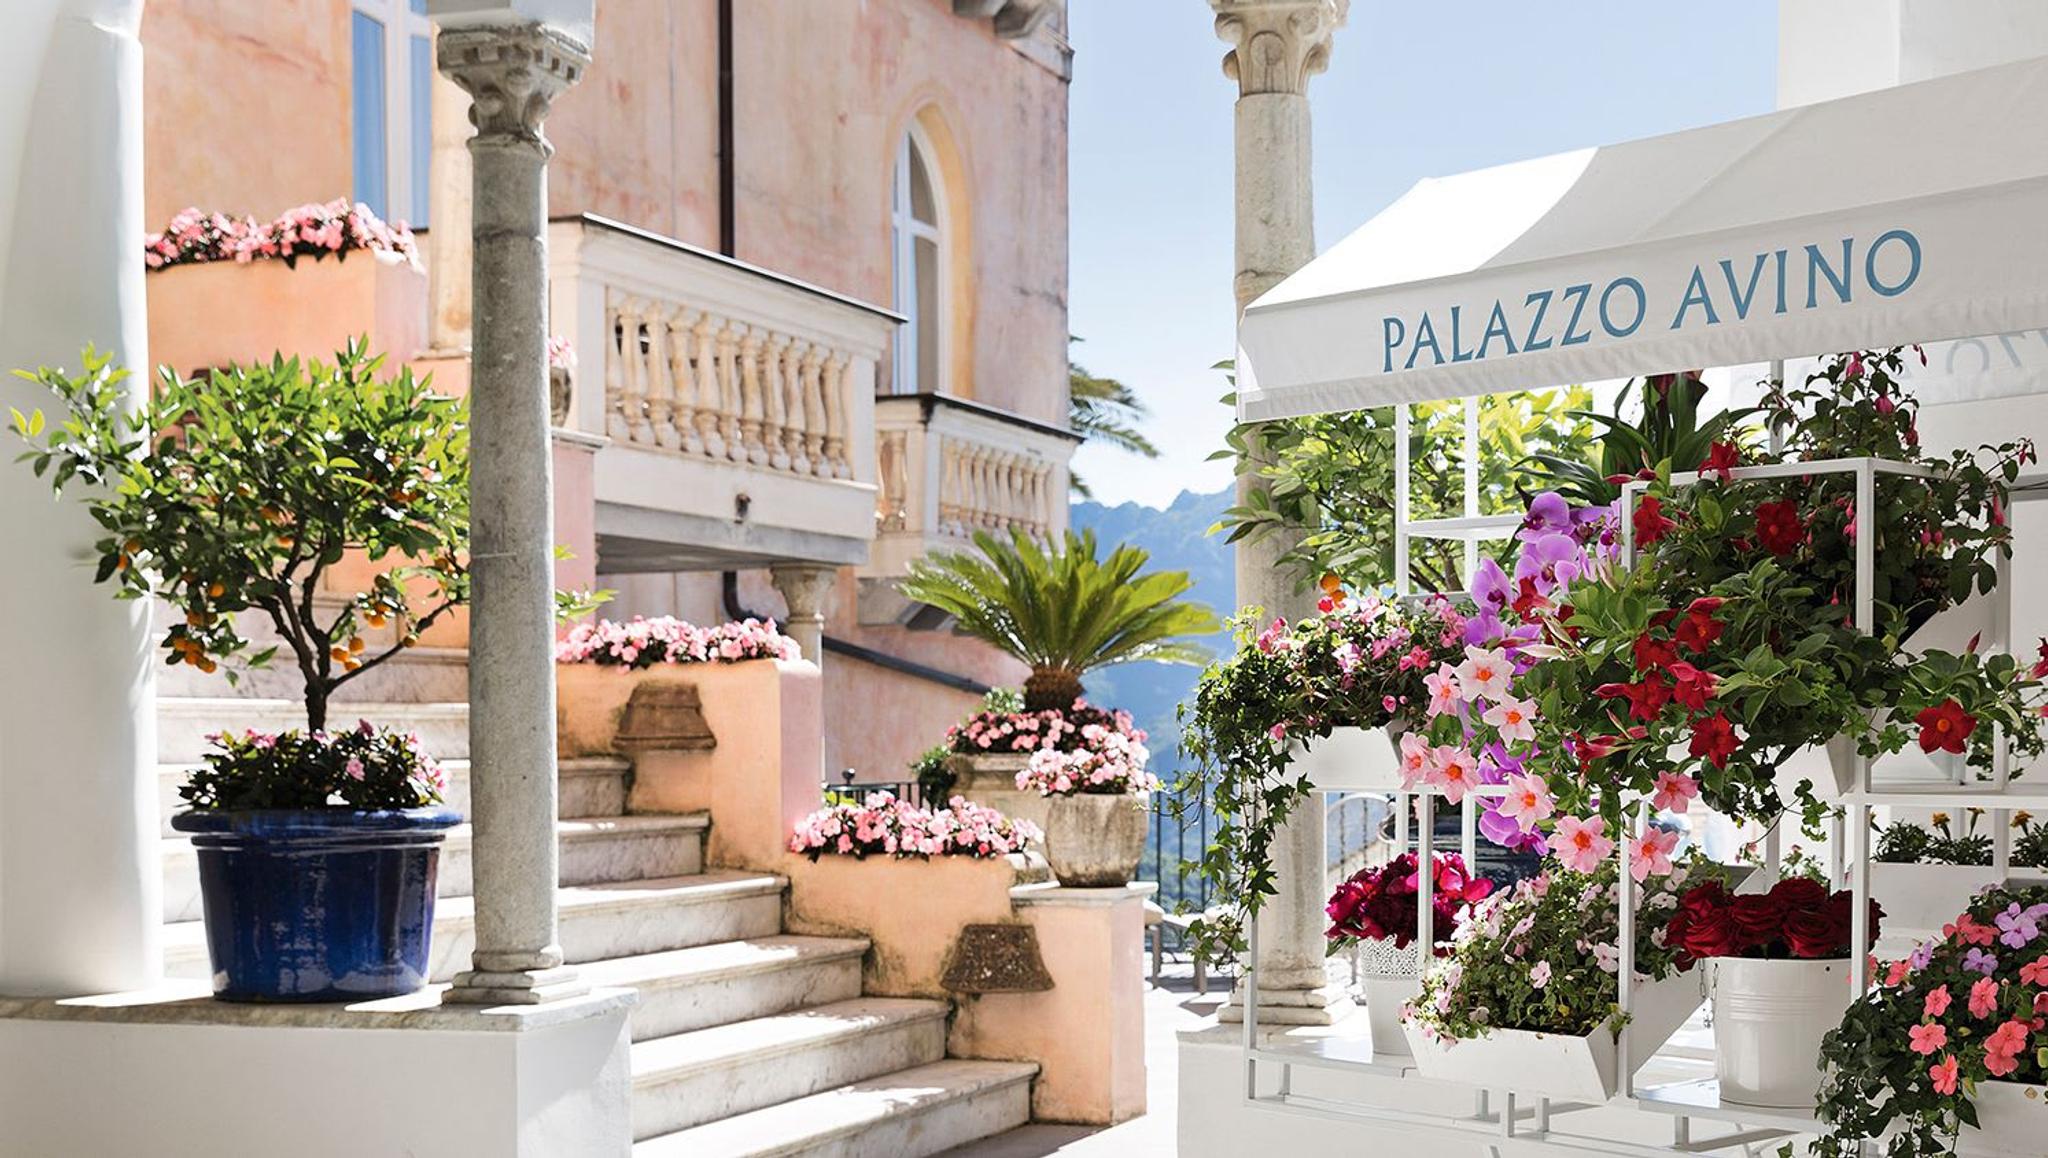 Le rêve de la côte d’Amalfi : Palazzo Avino